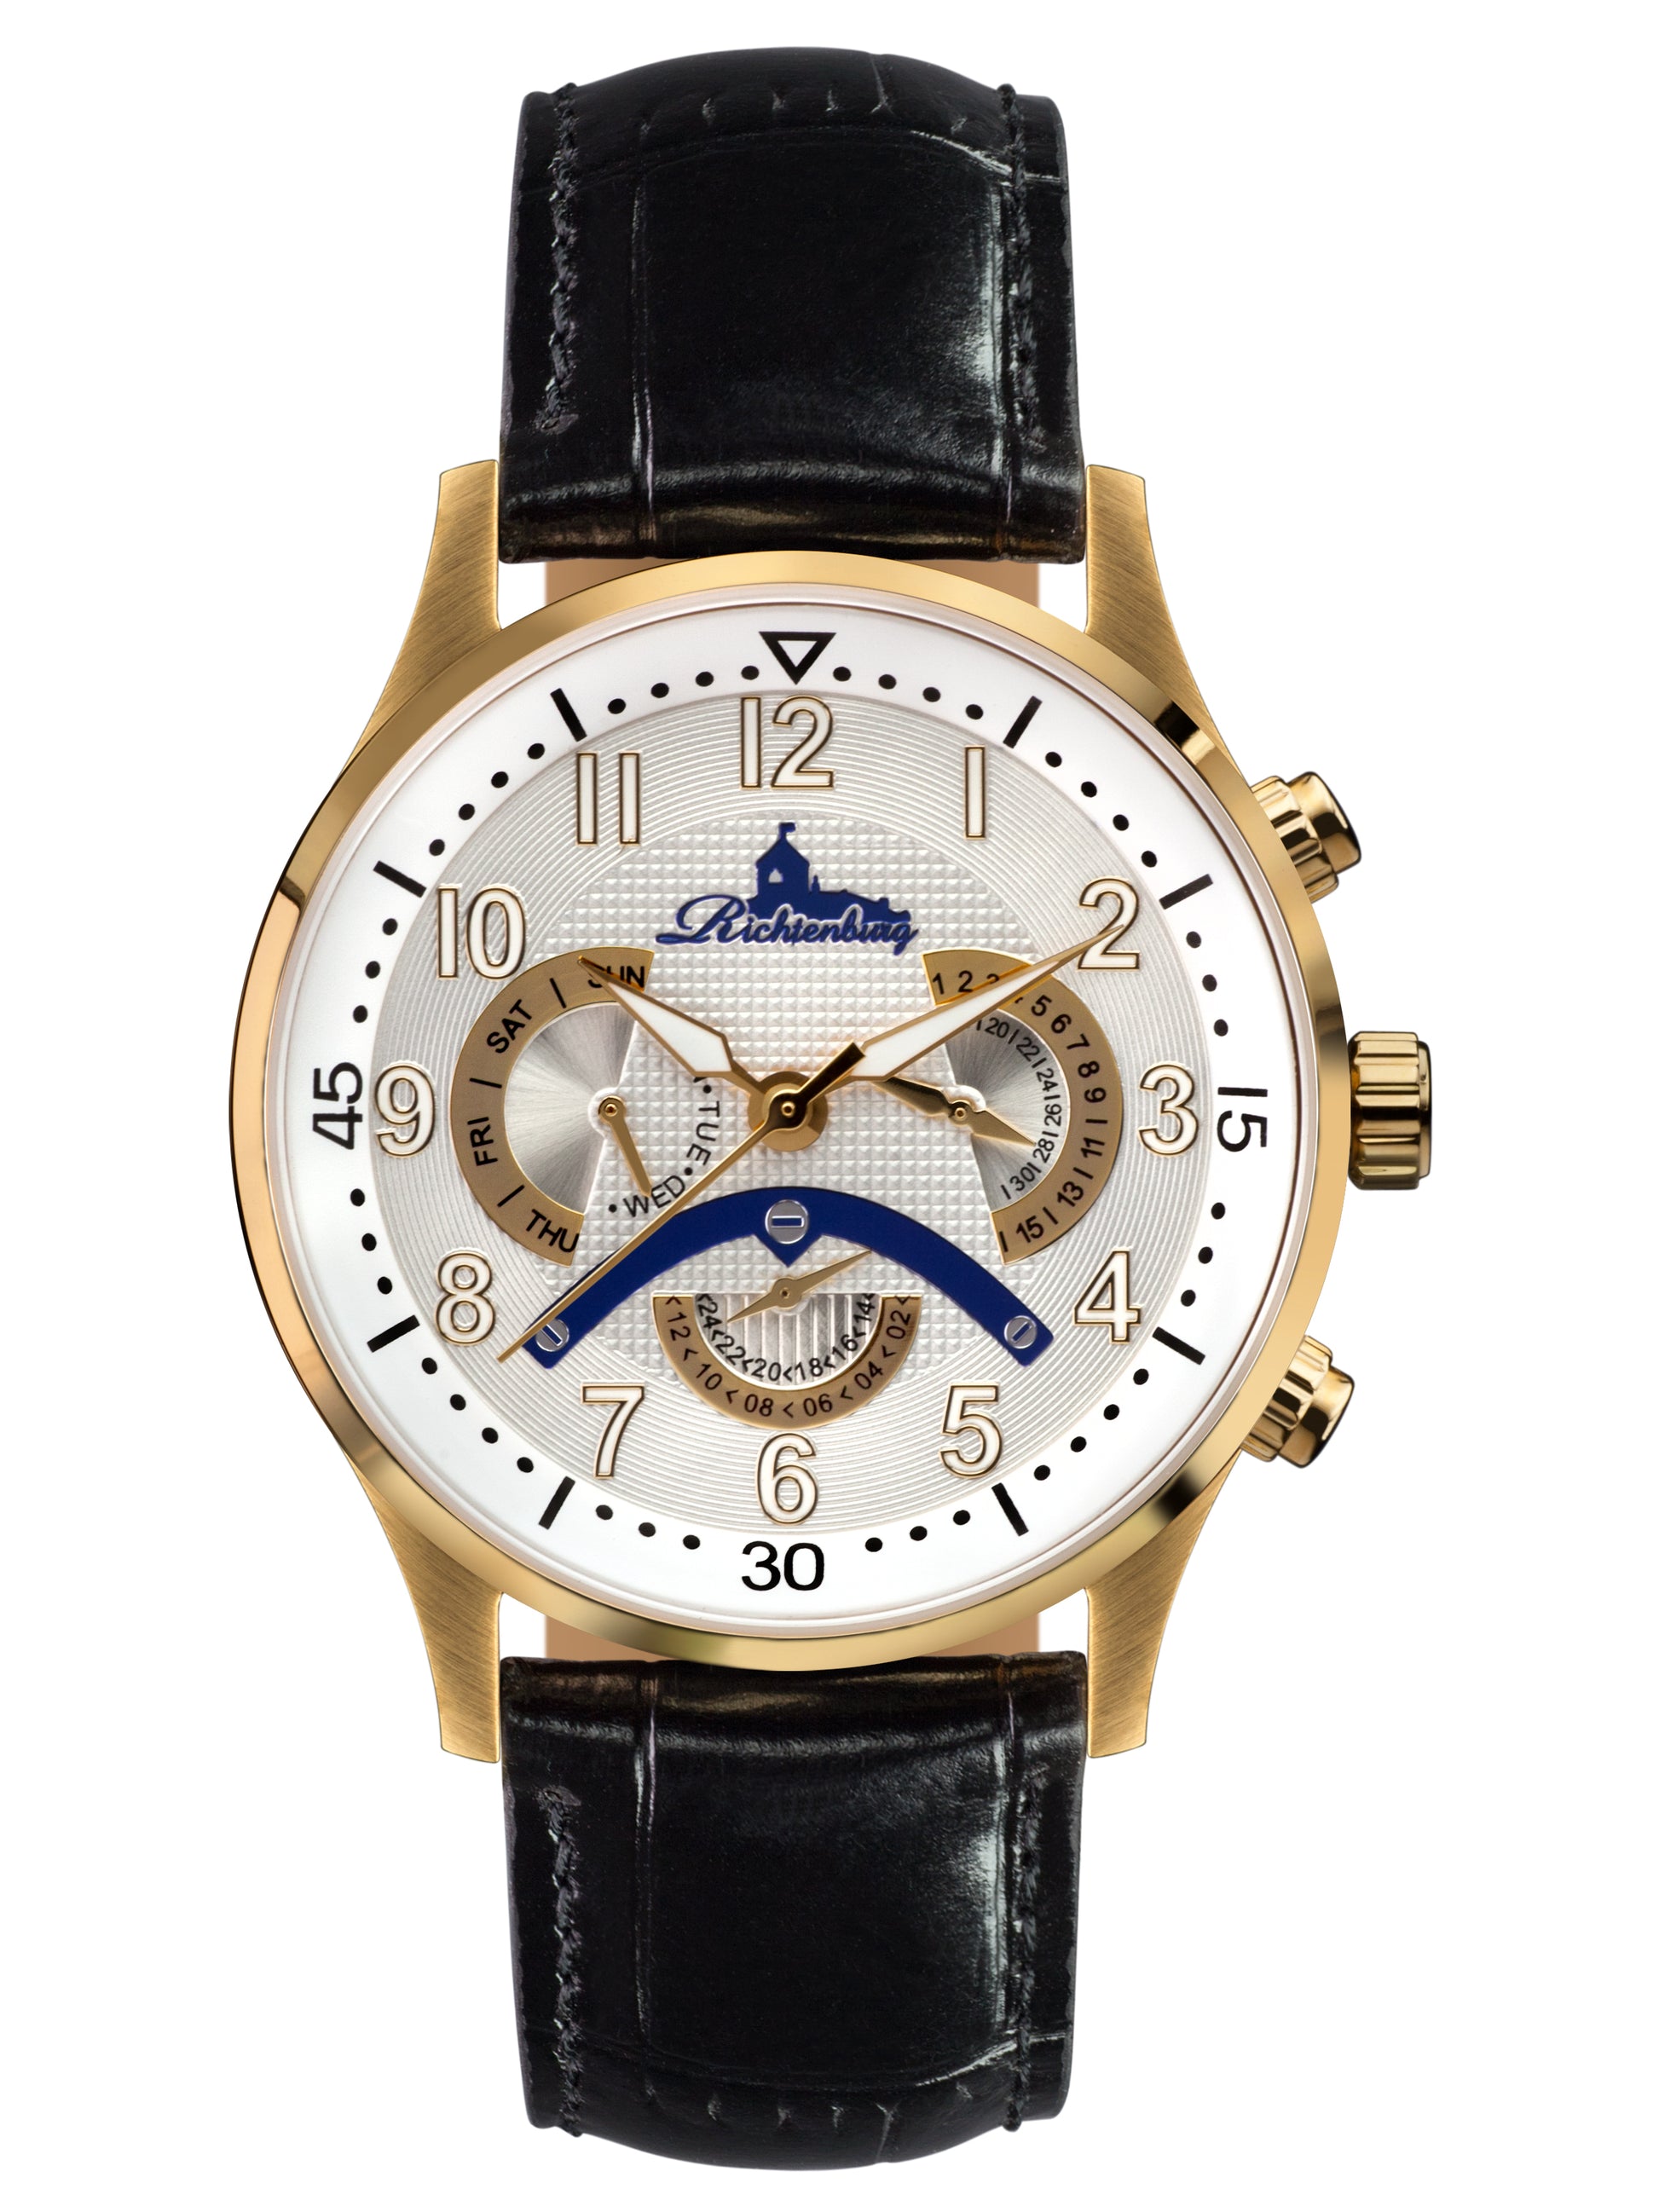 Automatic watches — Apia — Richtenburg — gold IP leather